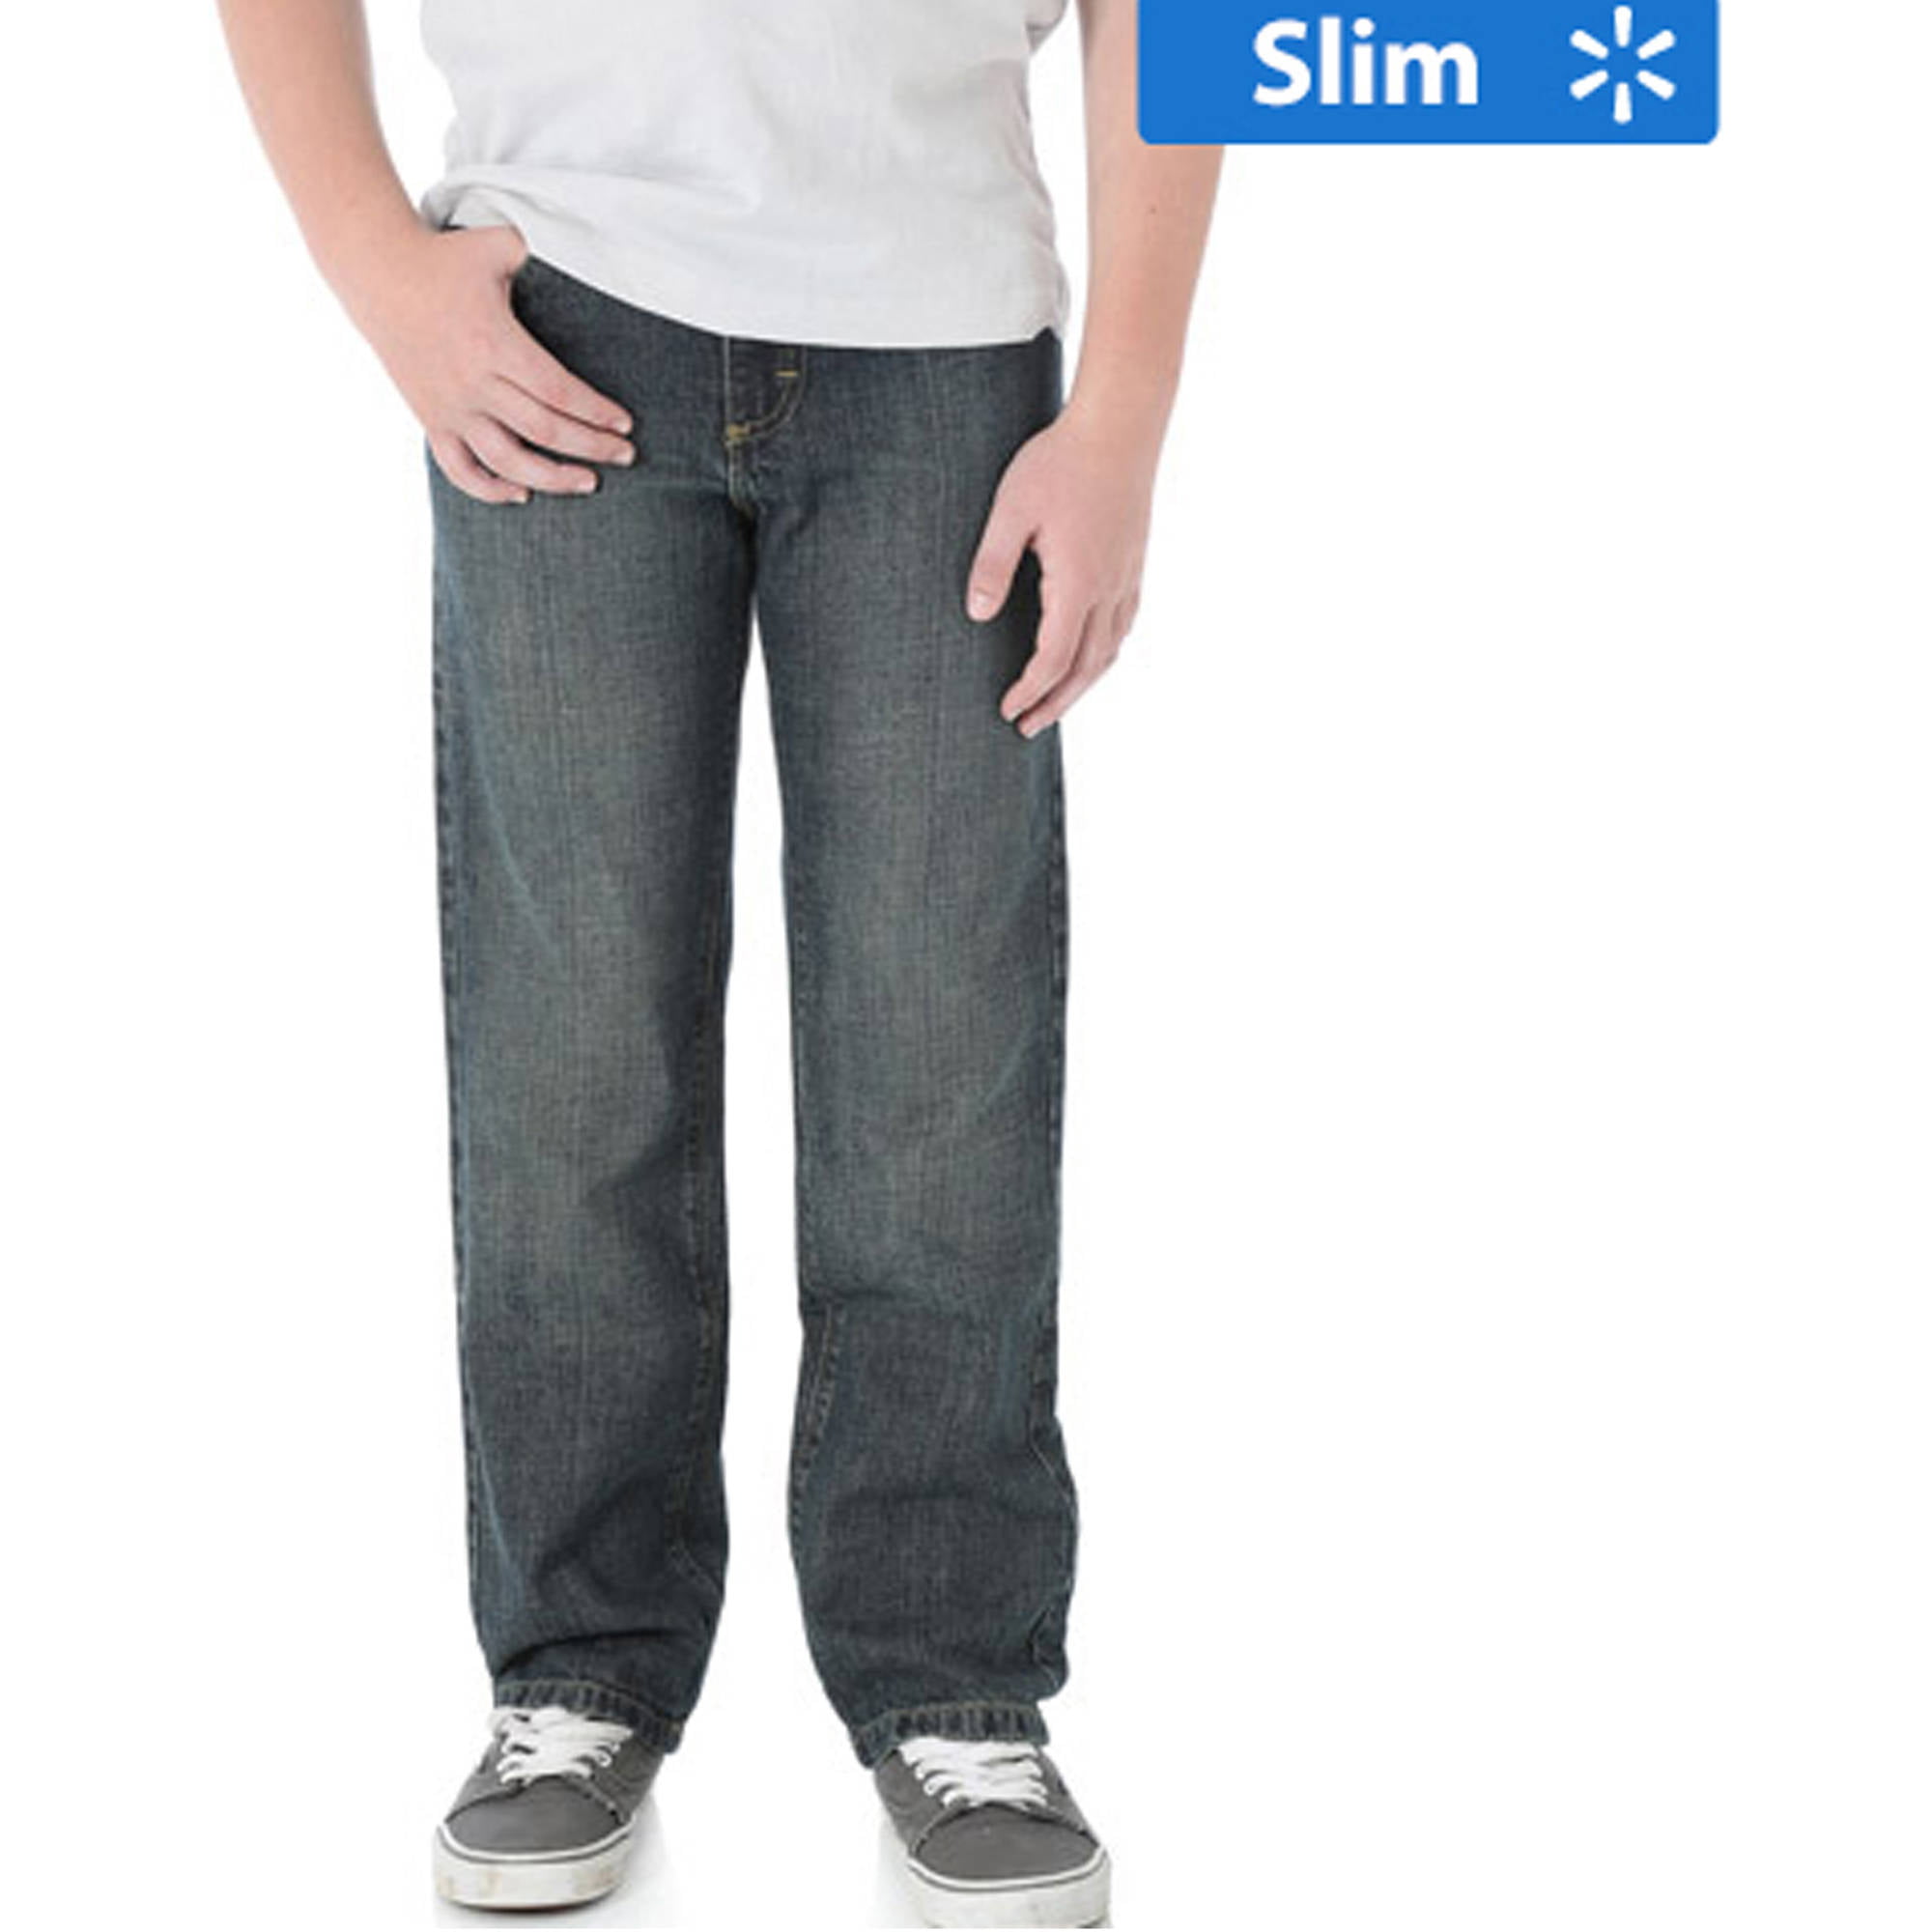 boys size 10 slim jeans